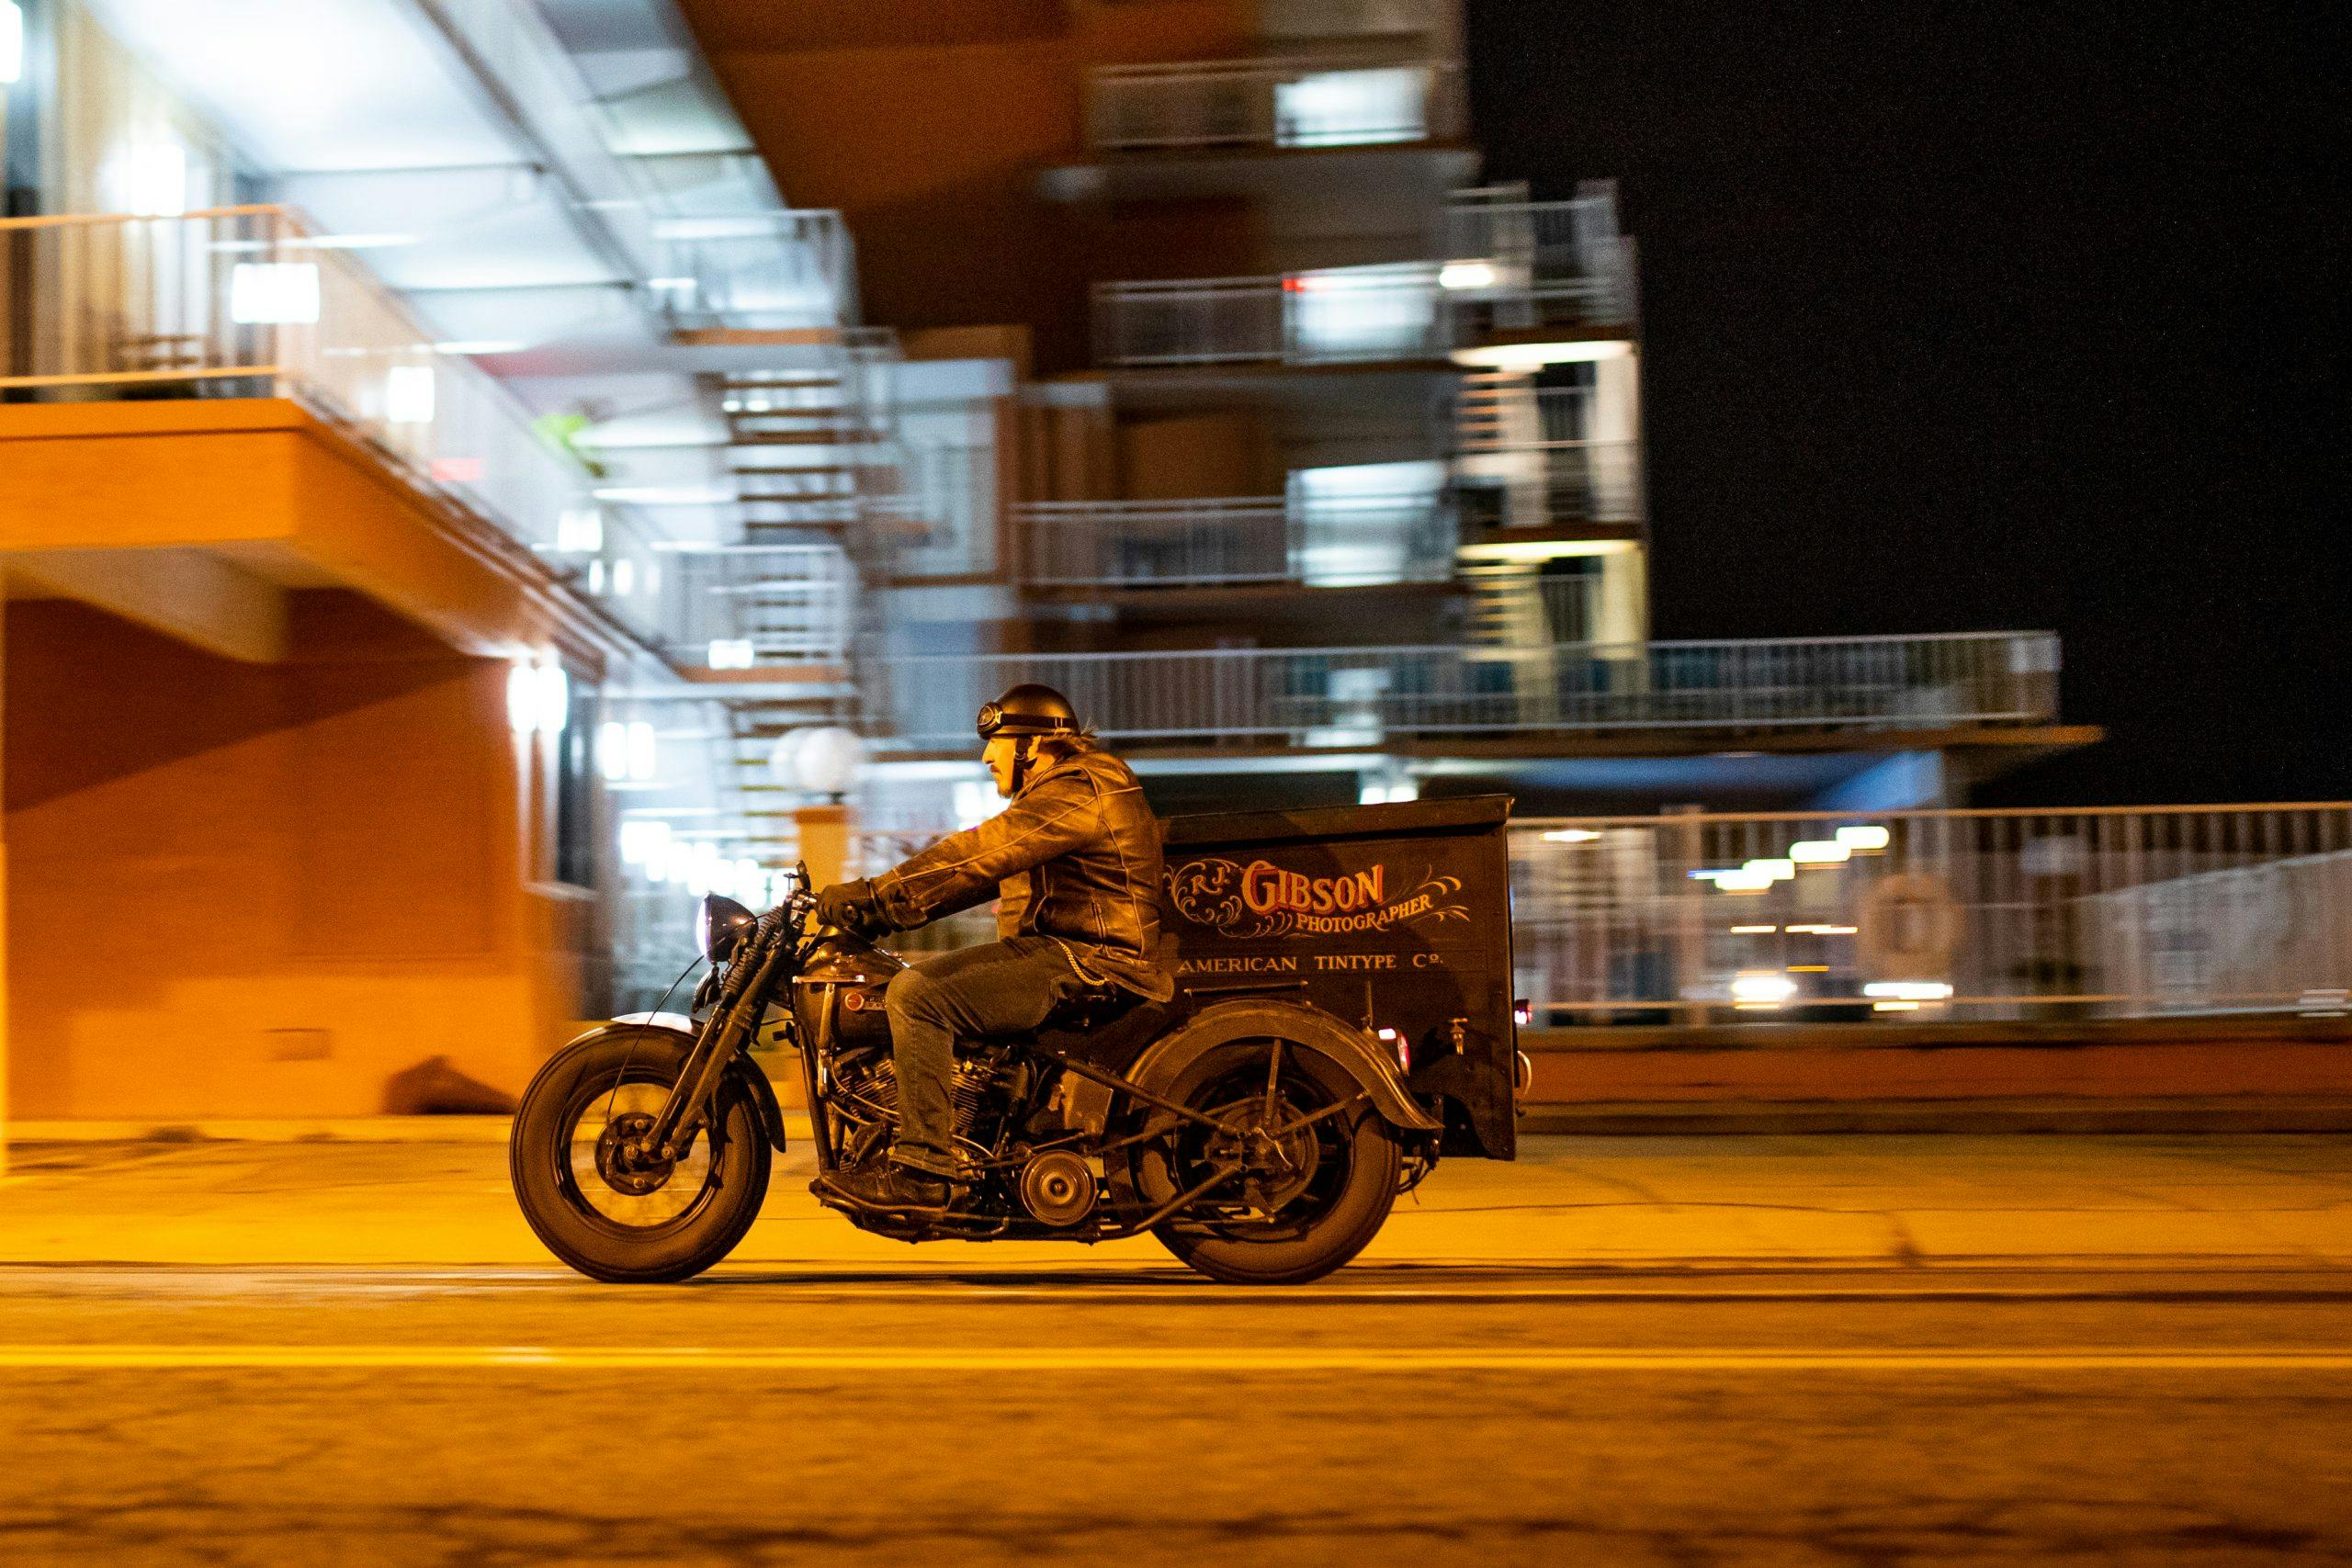 gibson motorbike street action